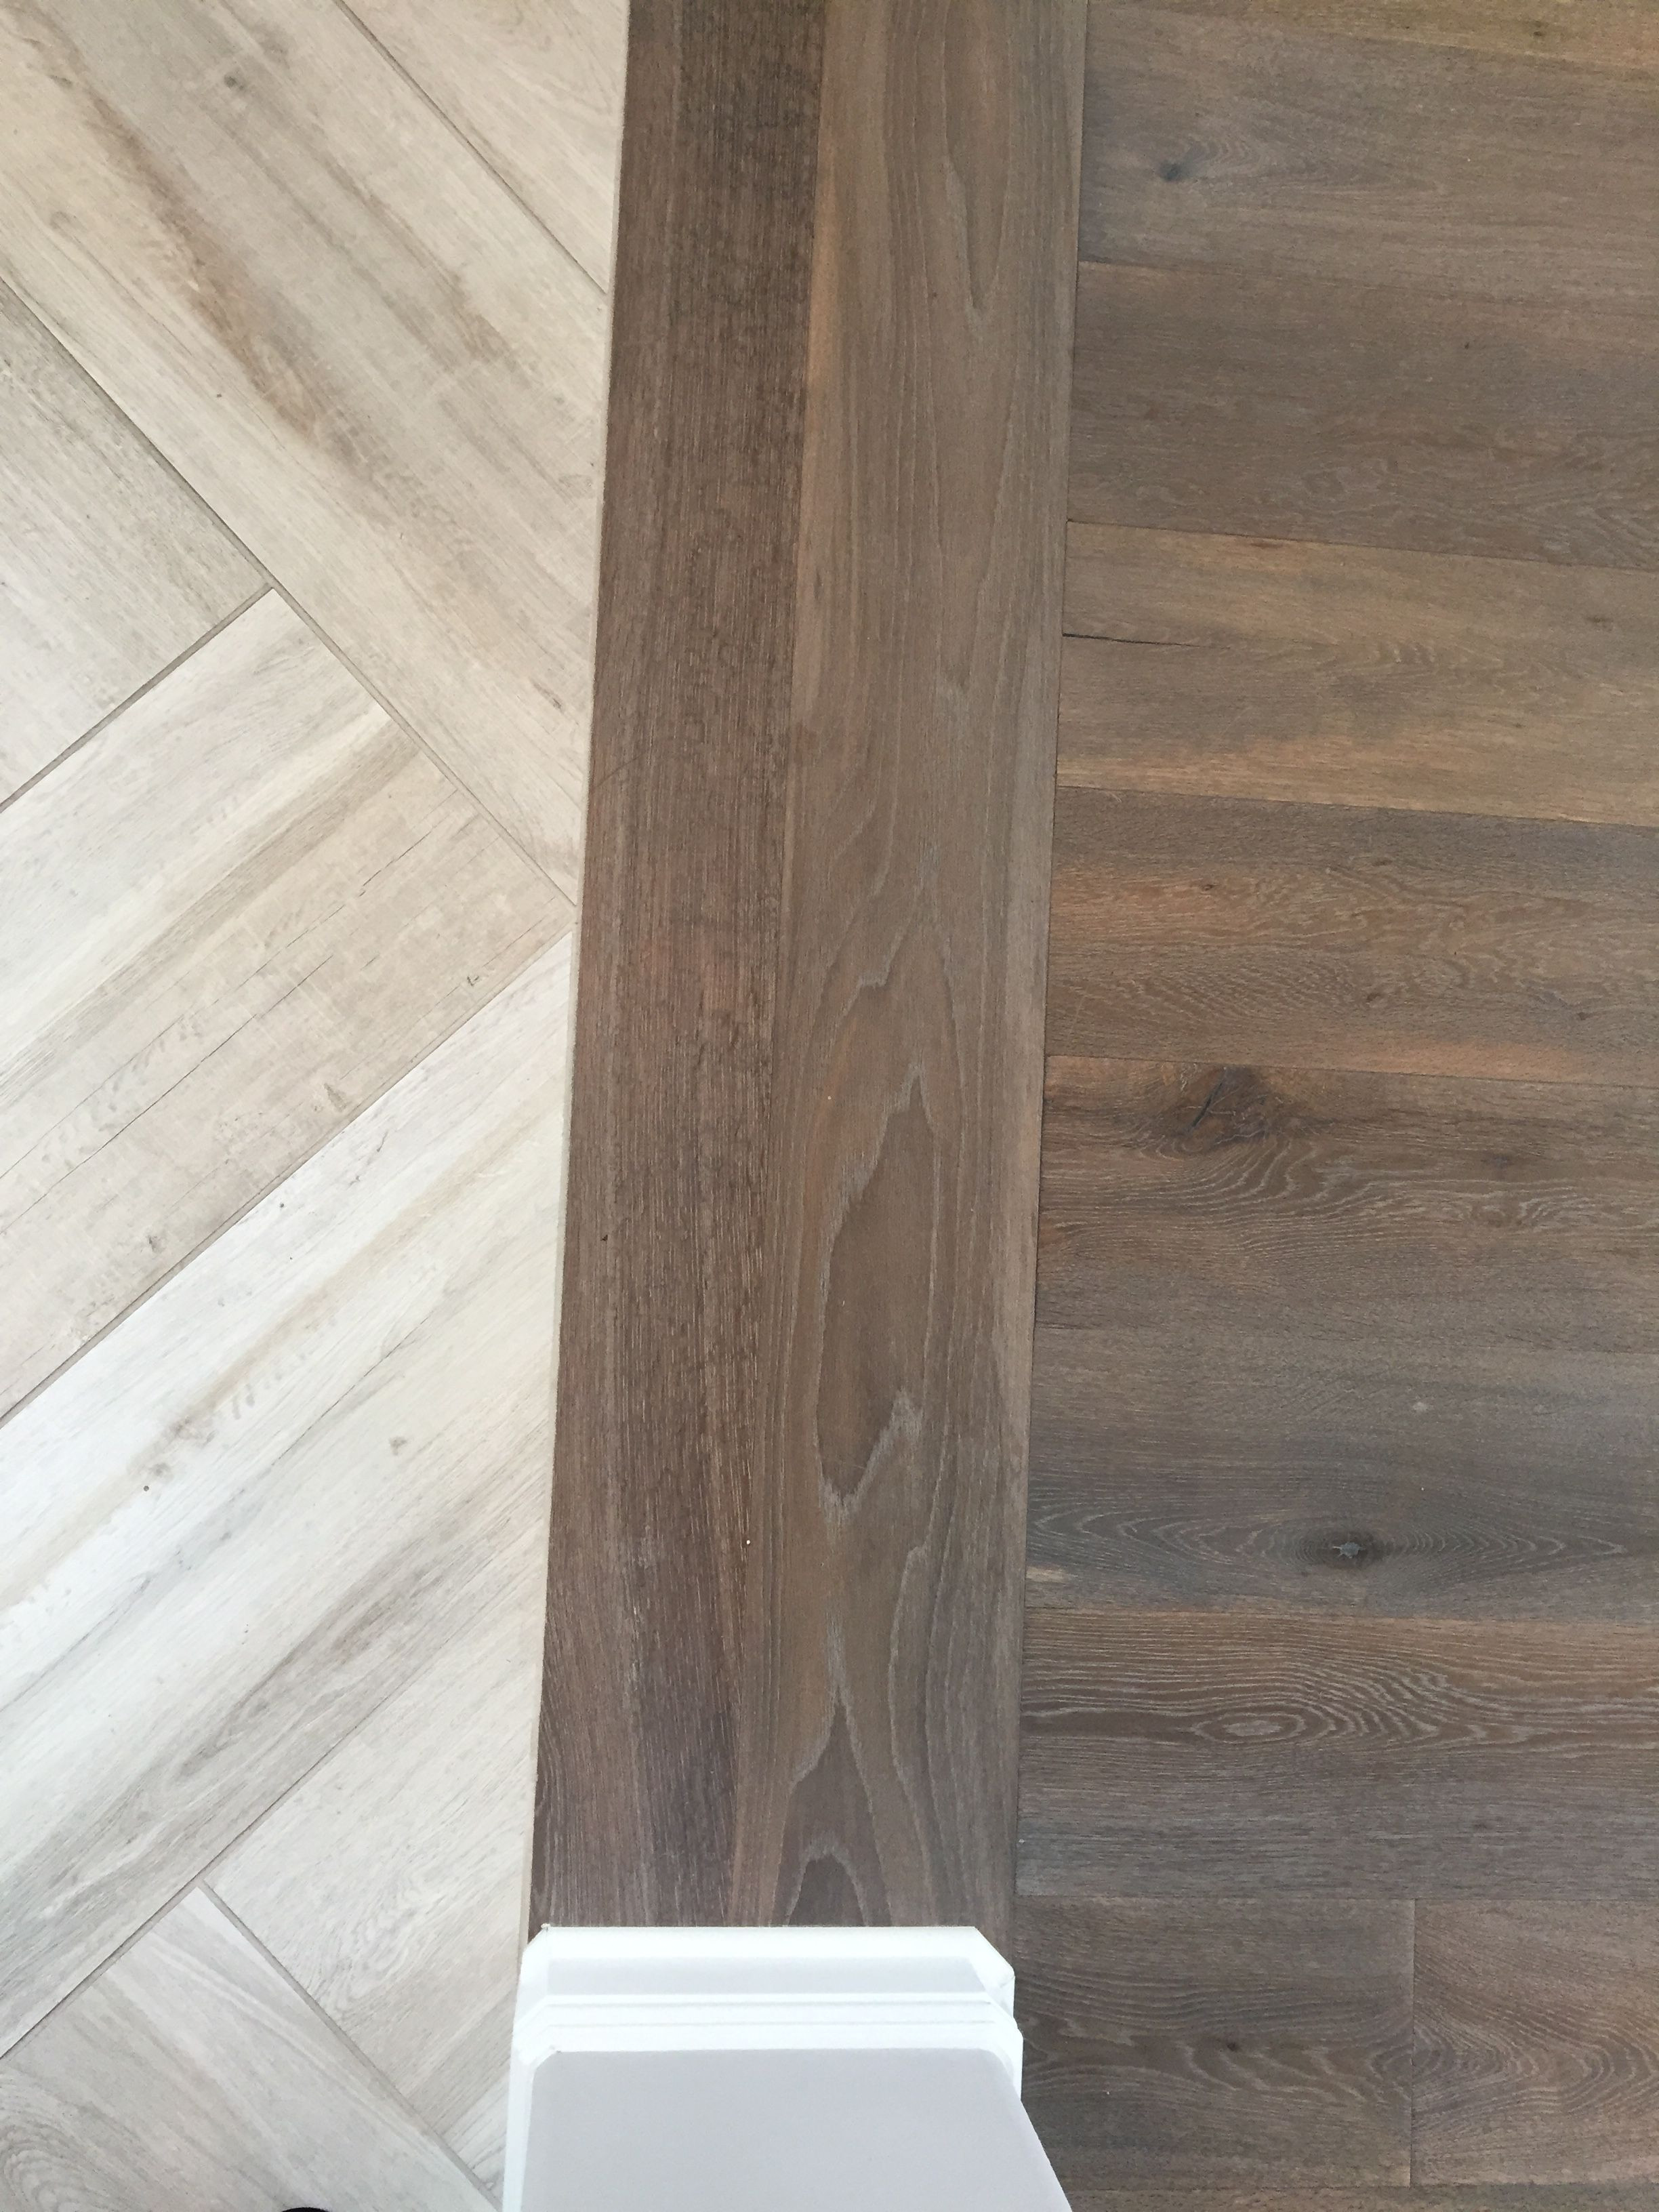 25 Lovable Hardwood Floor Transition Carpet 2024 free download hardwood floor transition carpet of floor transition laminate to herringbone tile pattern model with regard to floor transition laminate to herringbone tile pattern